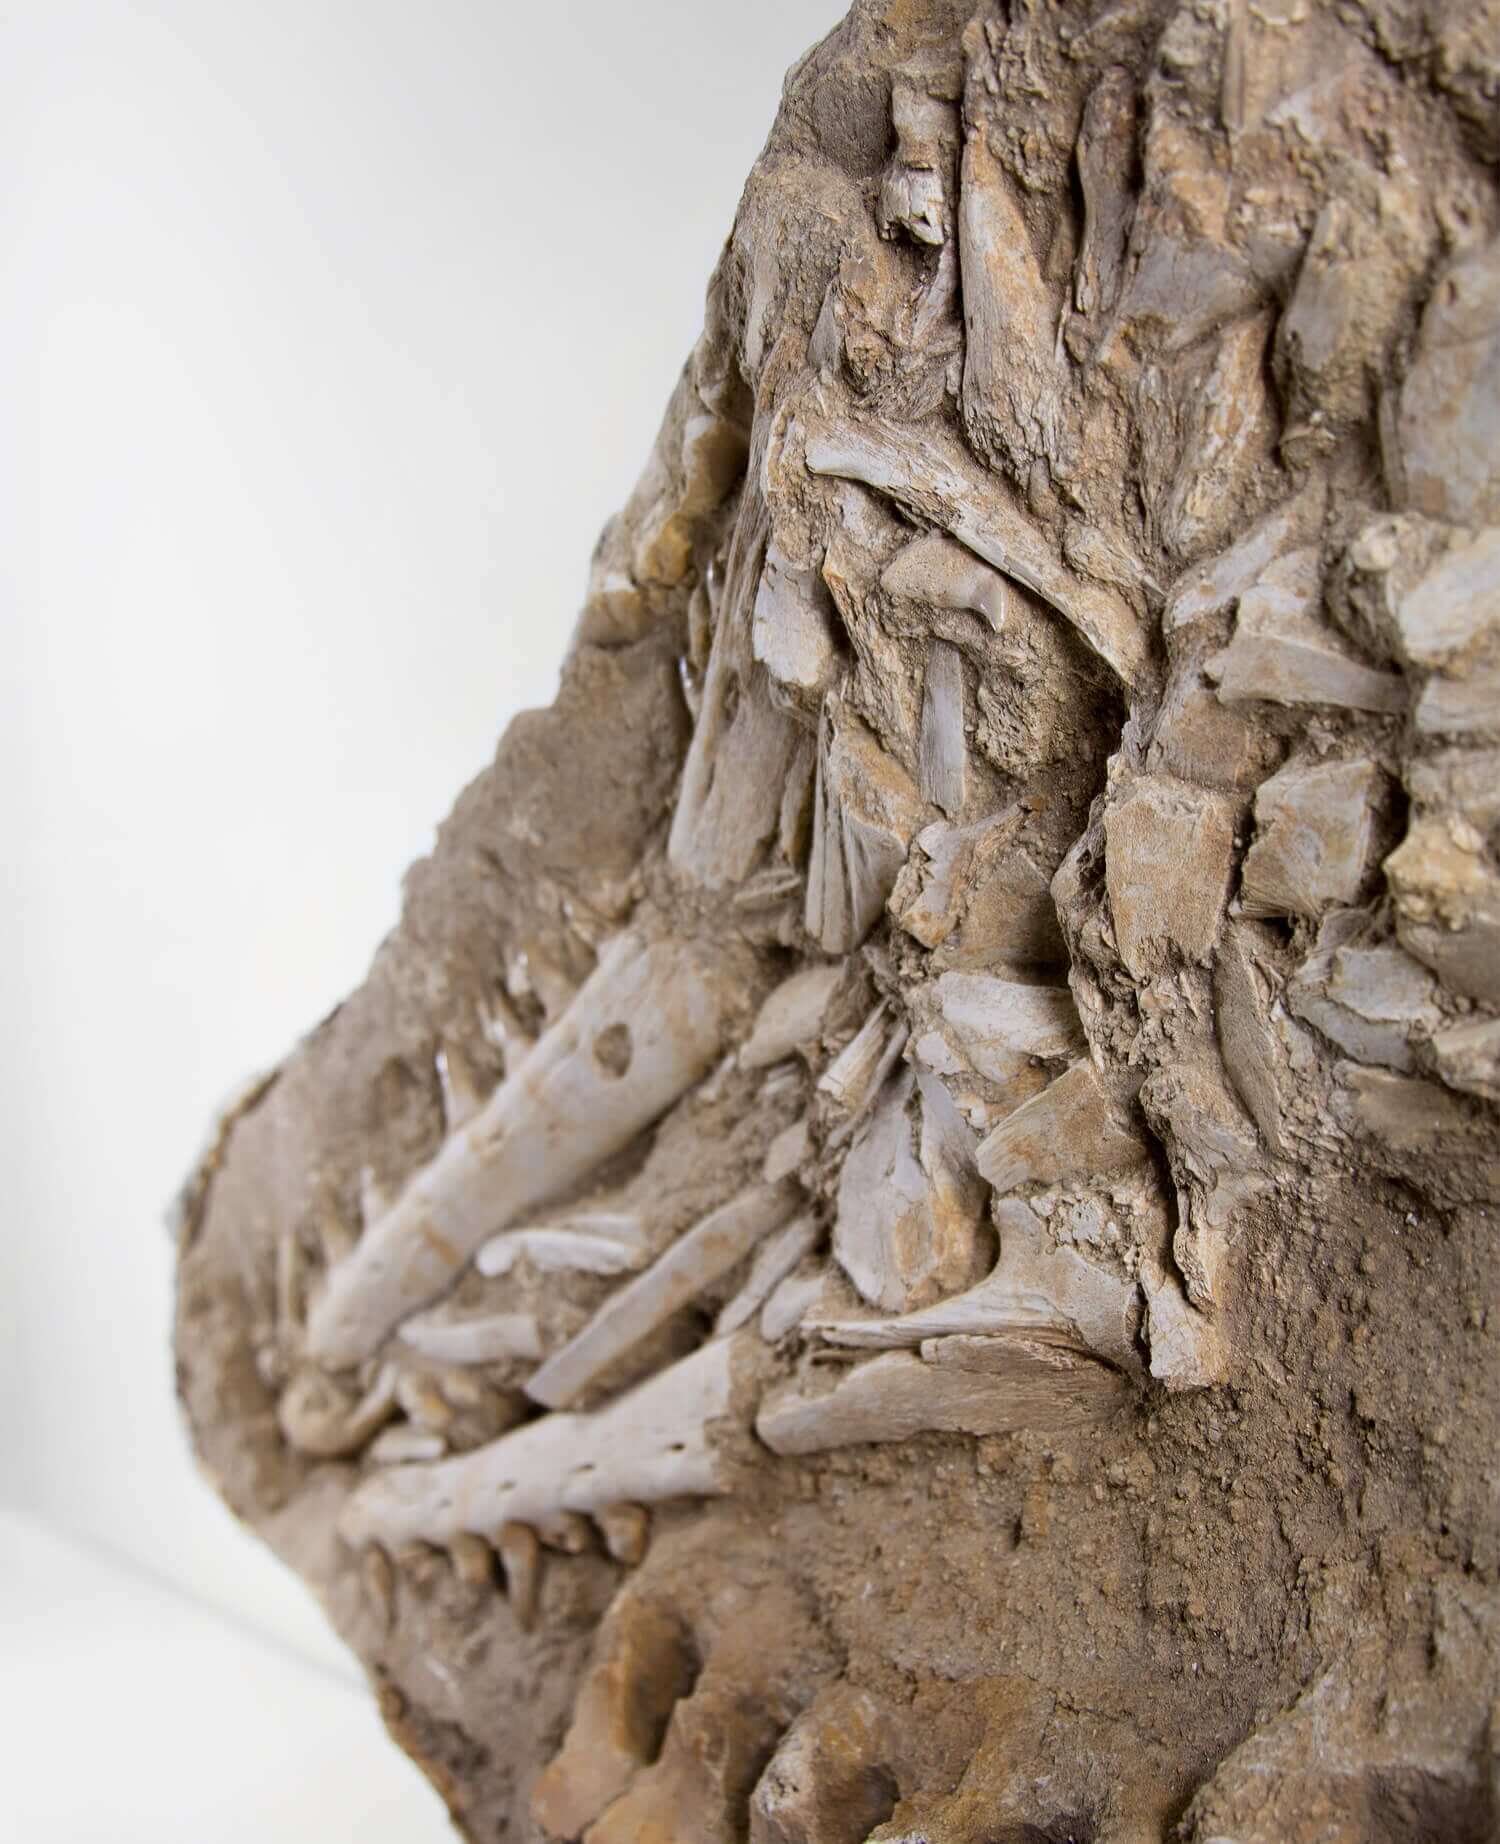 A stunning museum-standard rare fossil Halisaurus arambourgi mosasaurus jaw and vertebra for sale measuring 2.9 feet